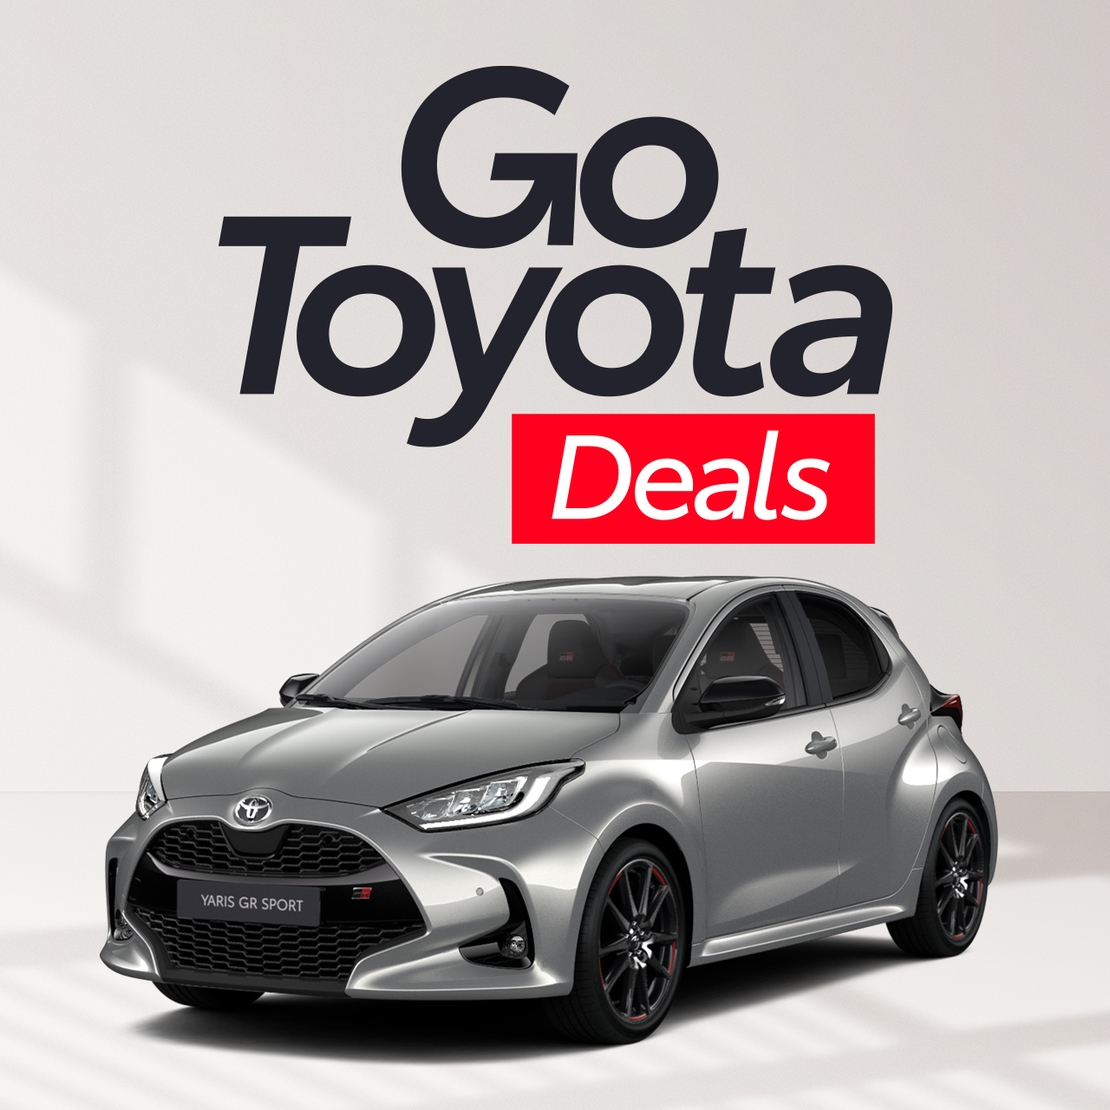 Toyota-Yaris-GoToyotaDeals-logo